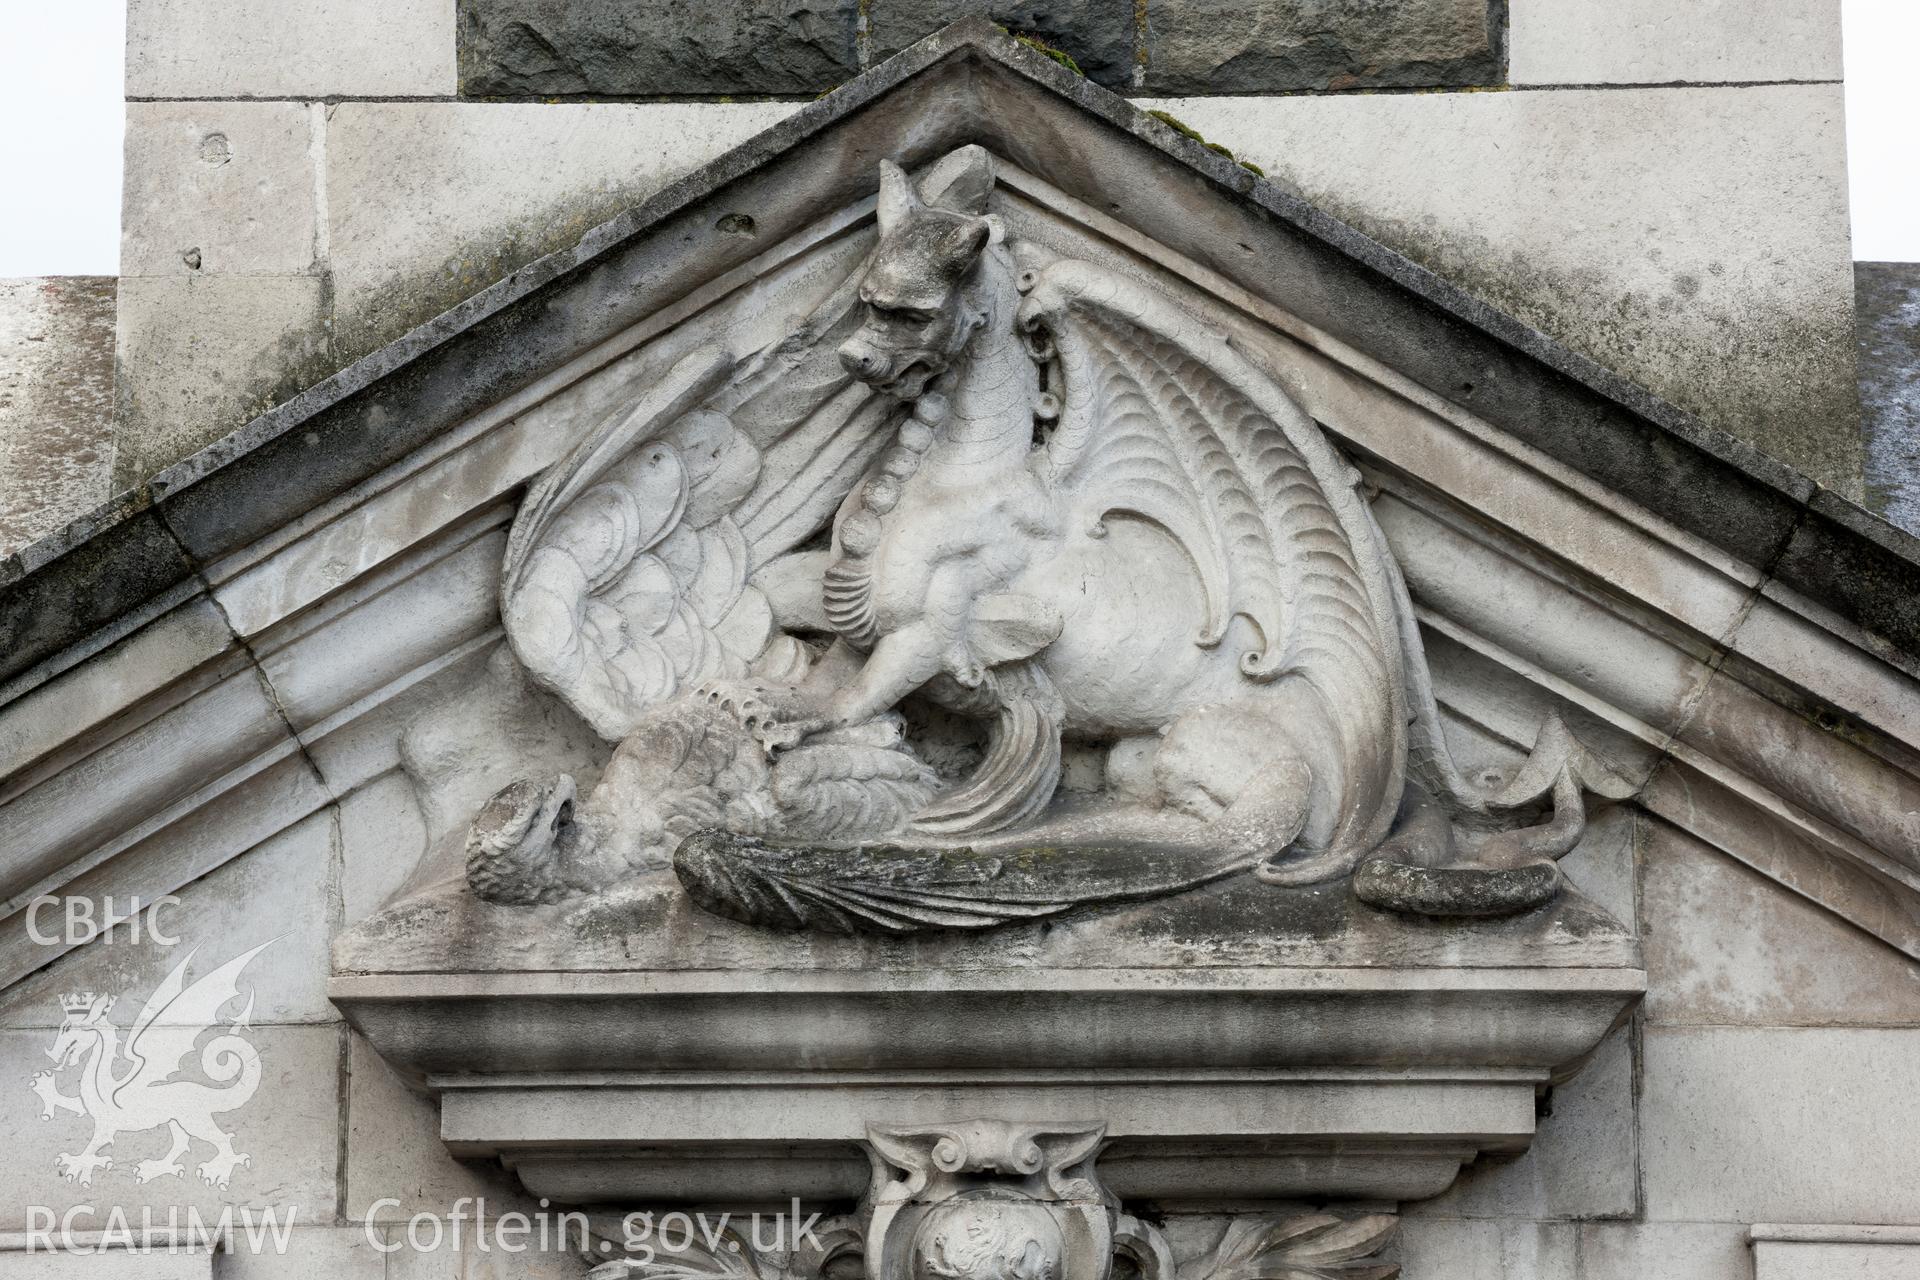 Carving of Welsh dragon on German eagle